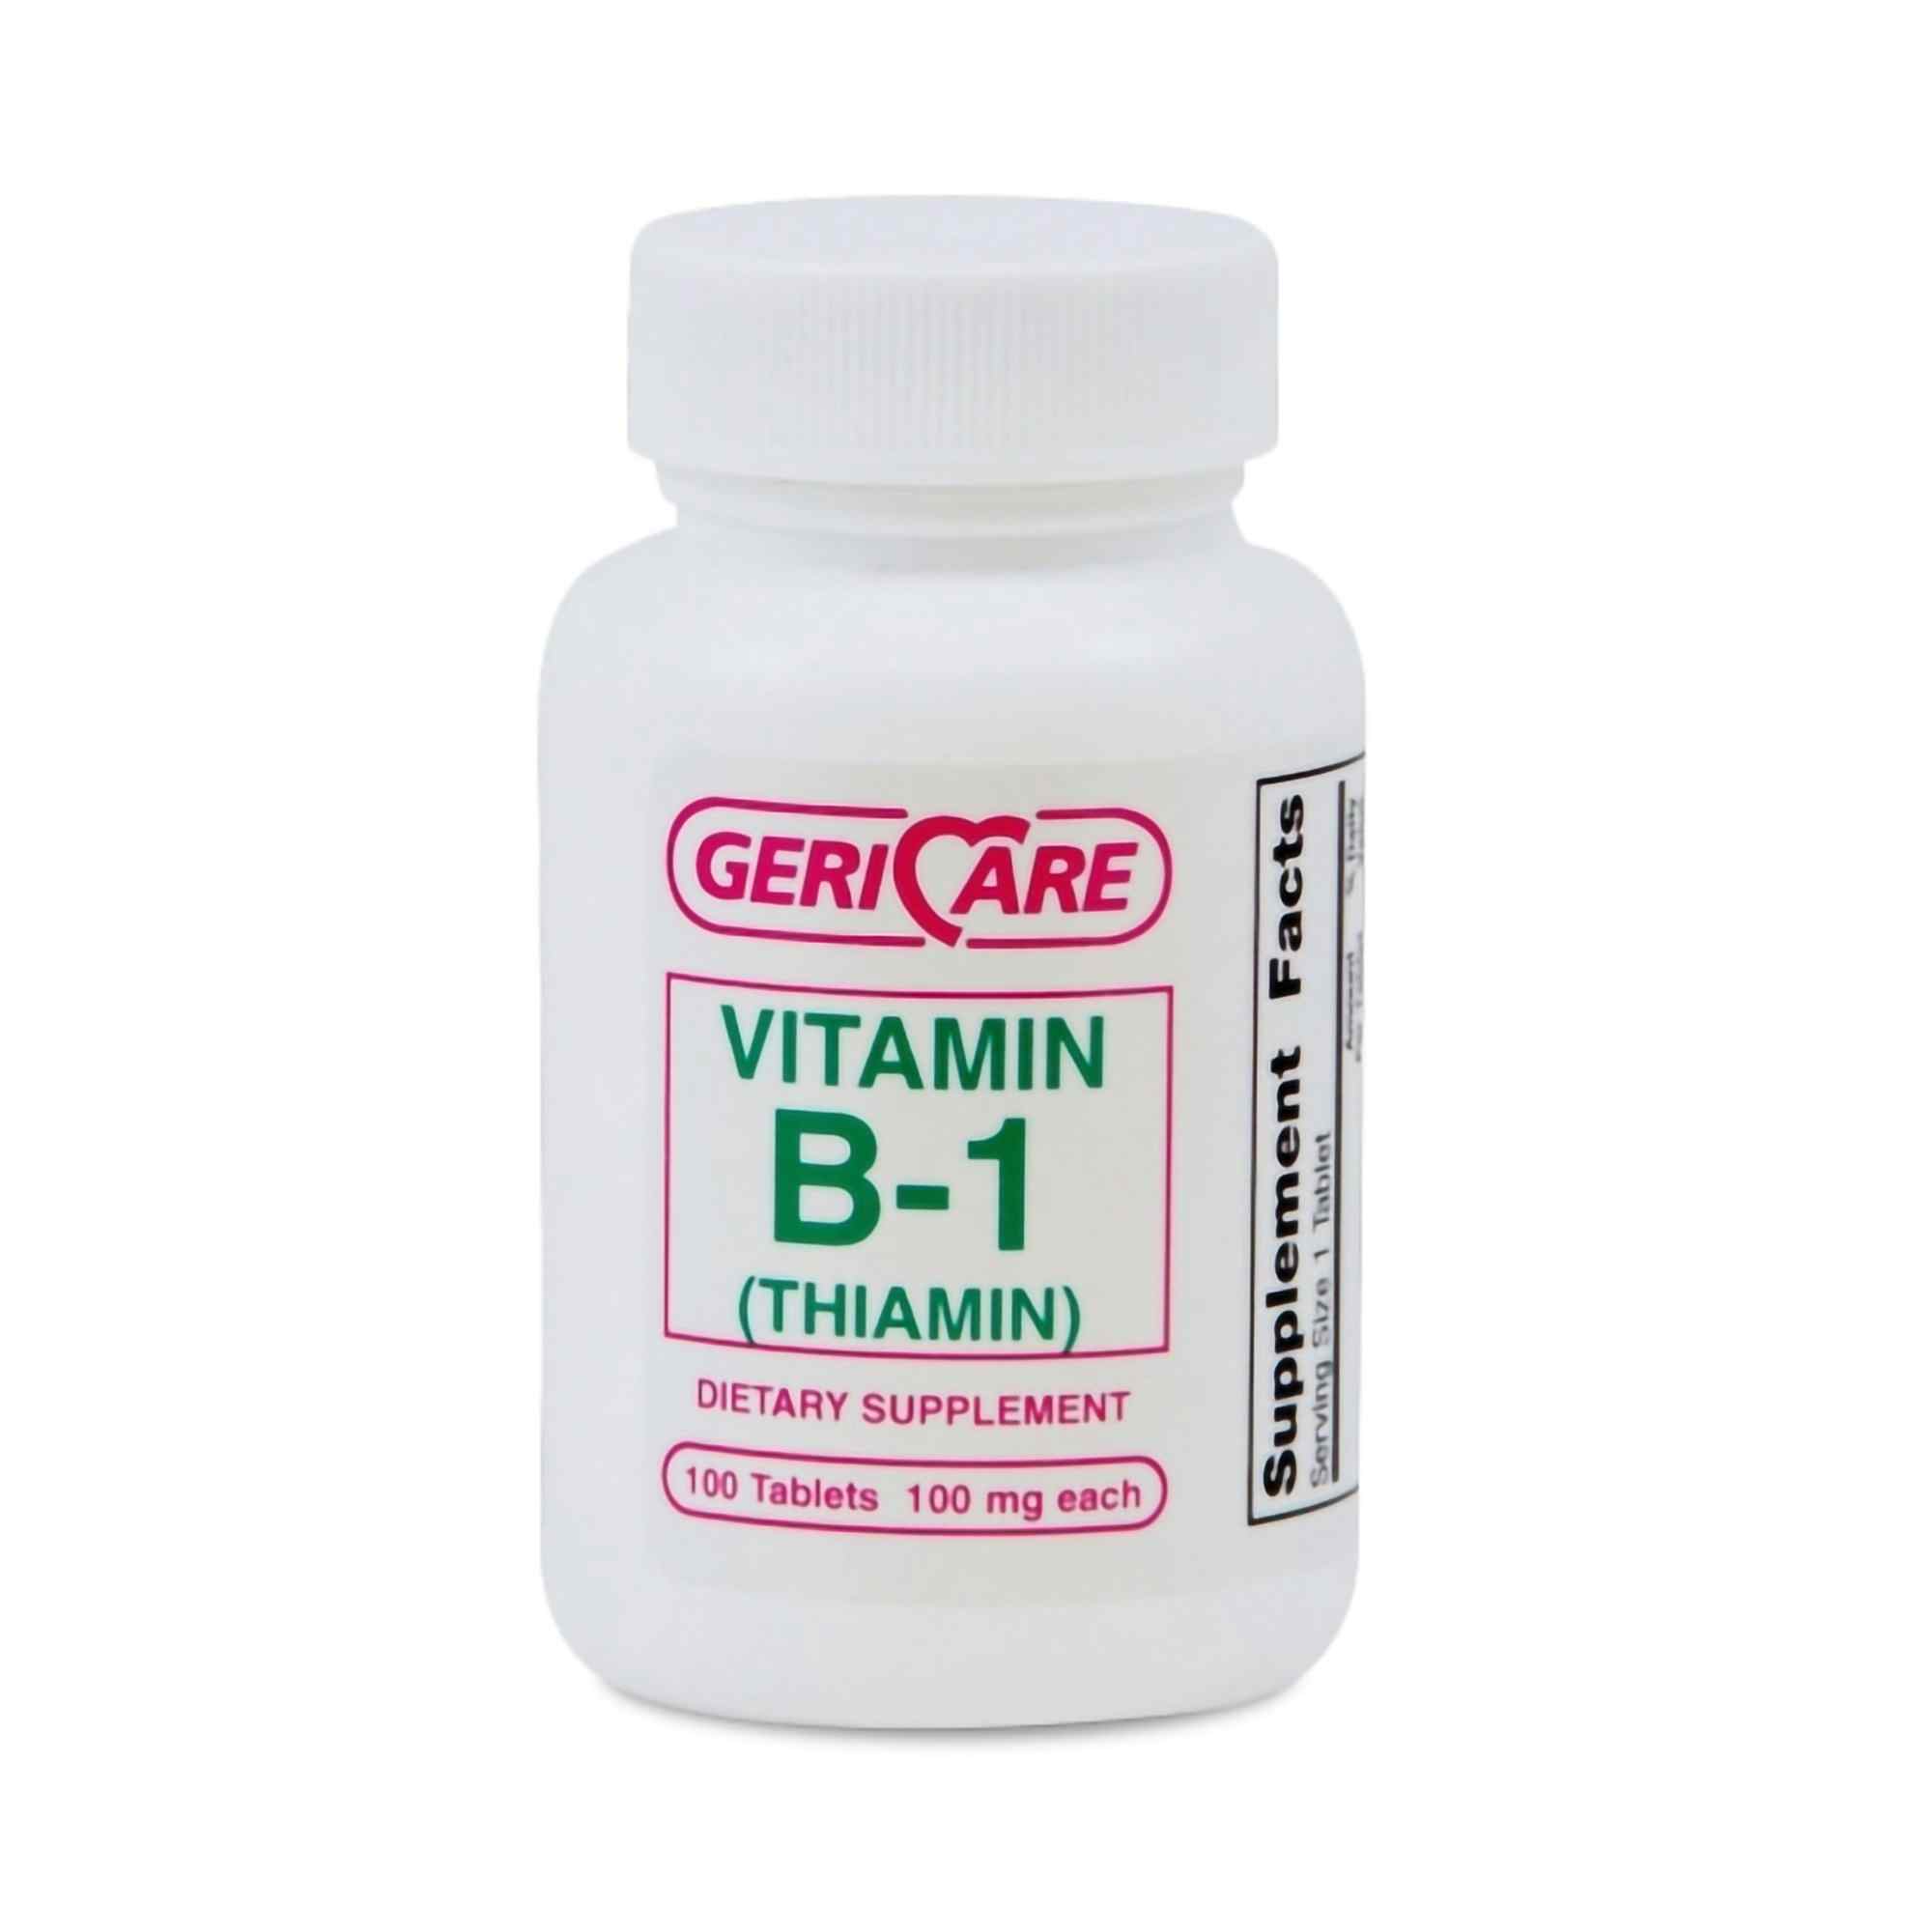 Geri-Care Vitamin B-1 Dietary Supplement, 100 mg, 100 Tablets, 851-01-GCP, 1 Bottle